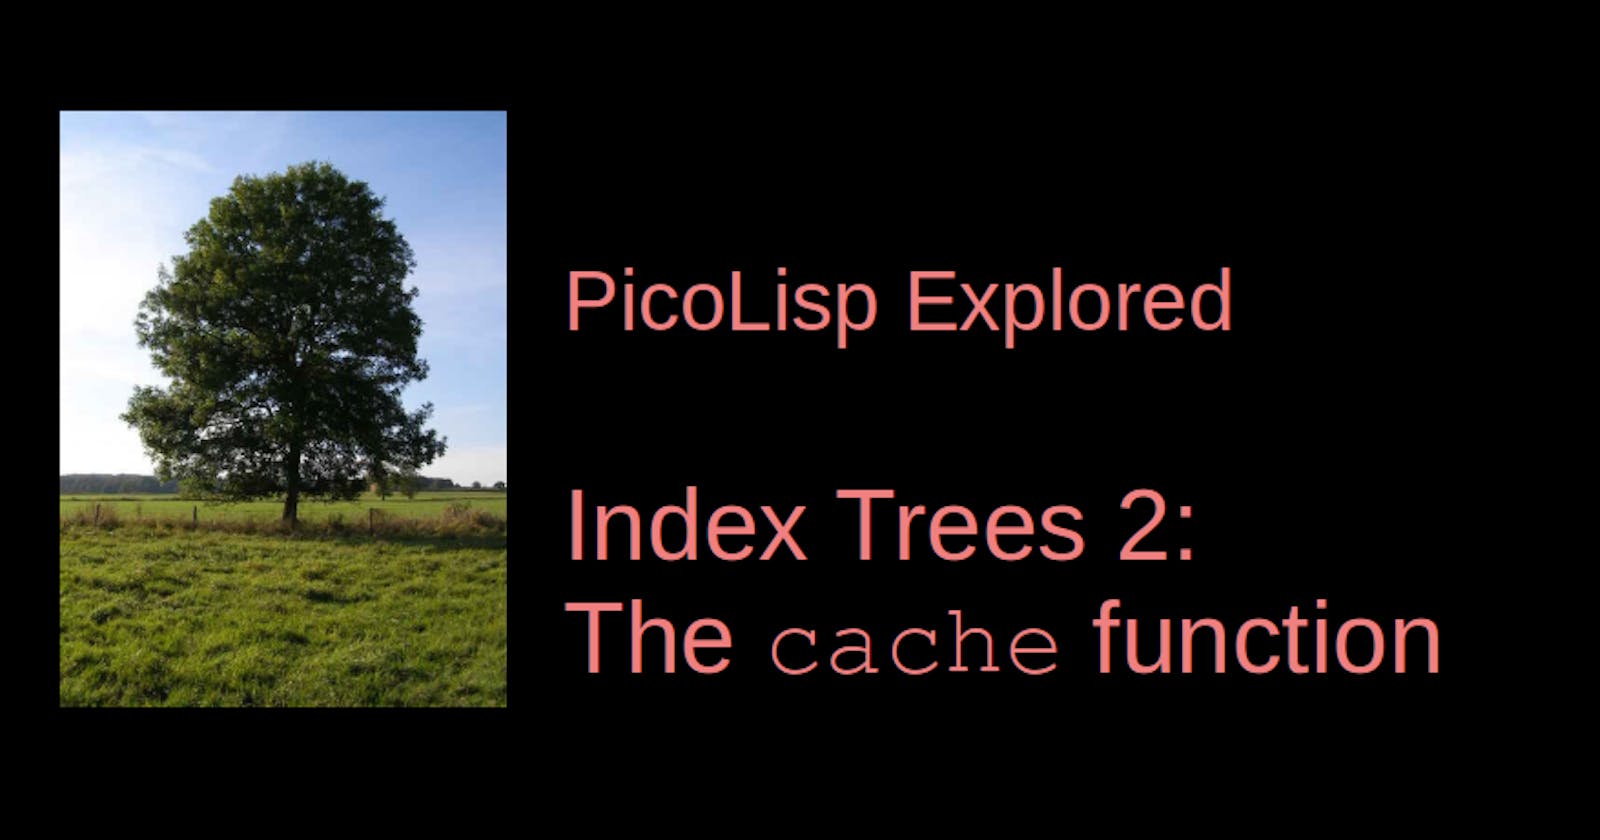 PicoLisp Explored: The cache function